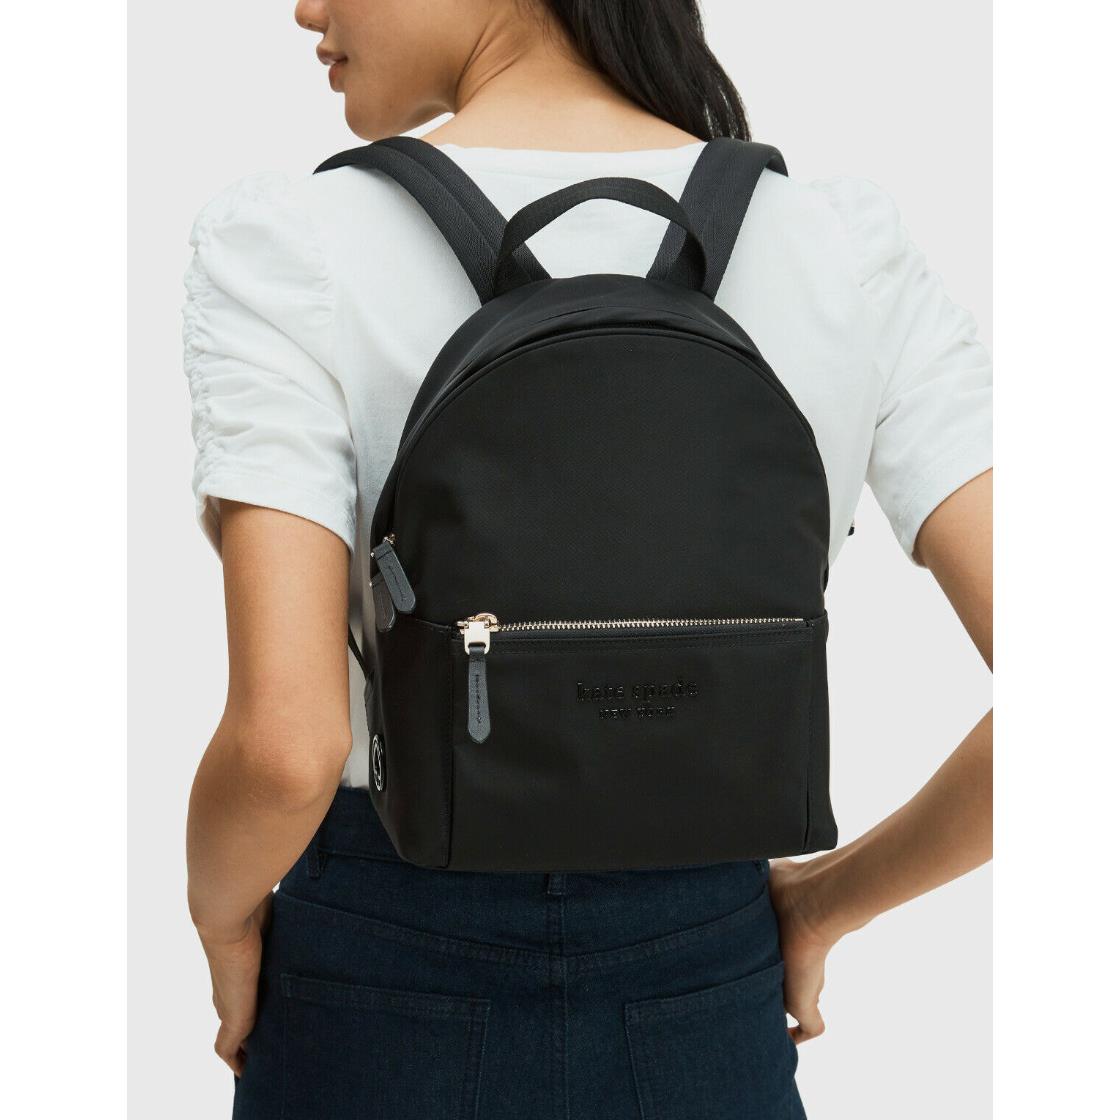 Kate Spade Nylon City Pack Medium Backpack Black New Kate Spade Boutique Item